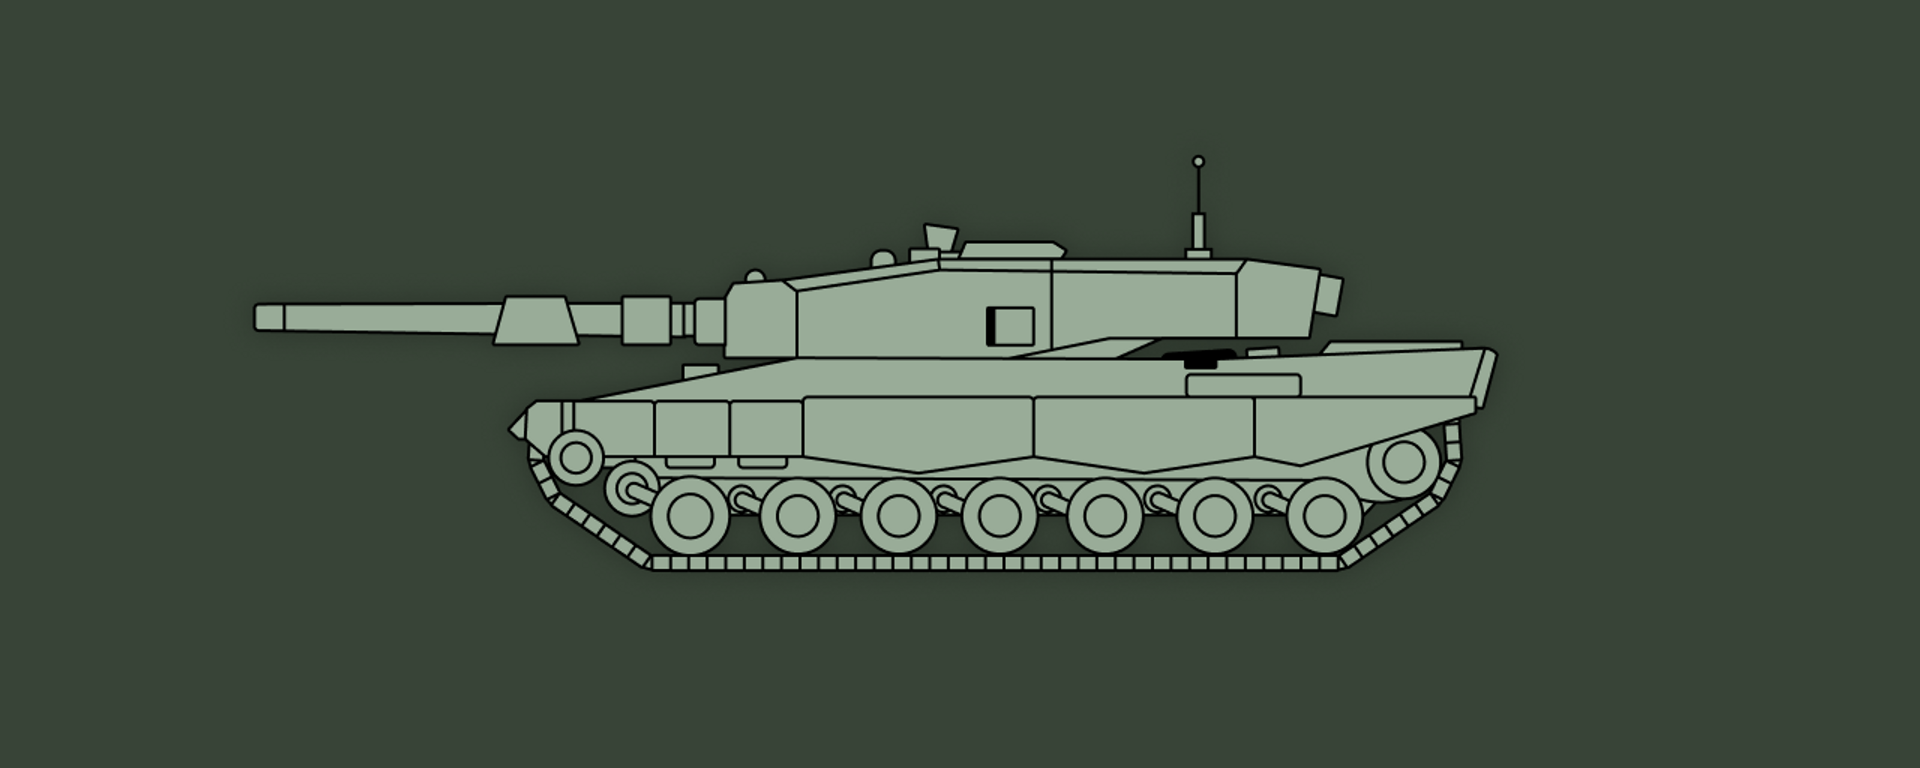 Tanques Leopard 2: los vehículos blindados que Berlín enviará a Ucrania - Sputnik Mundo, 1920, 25.01.2023